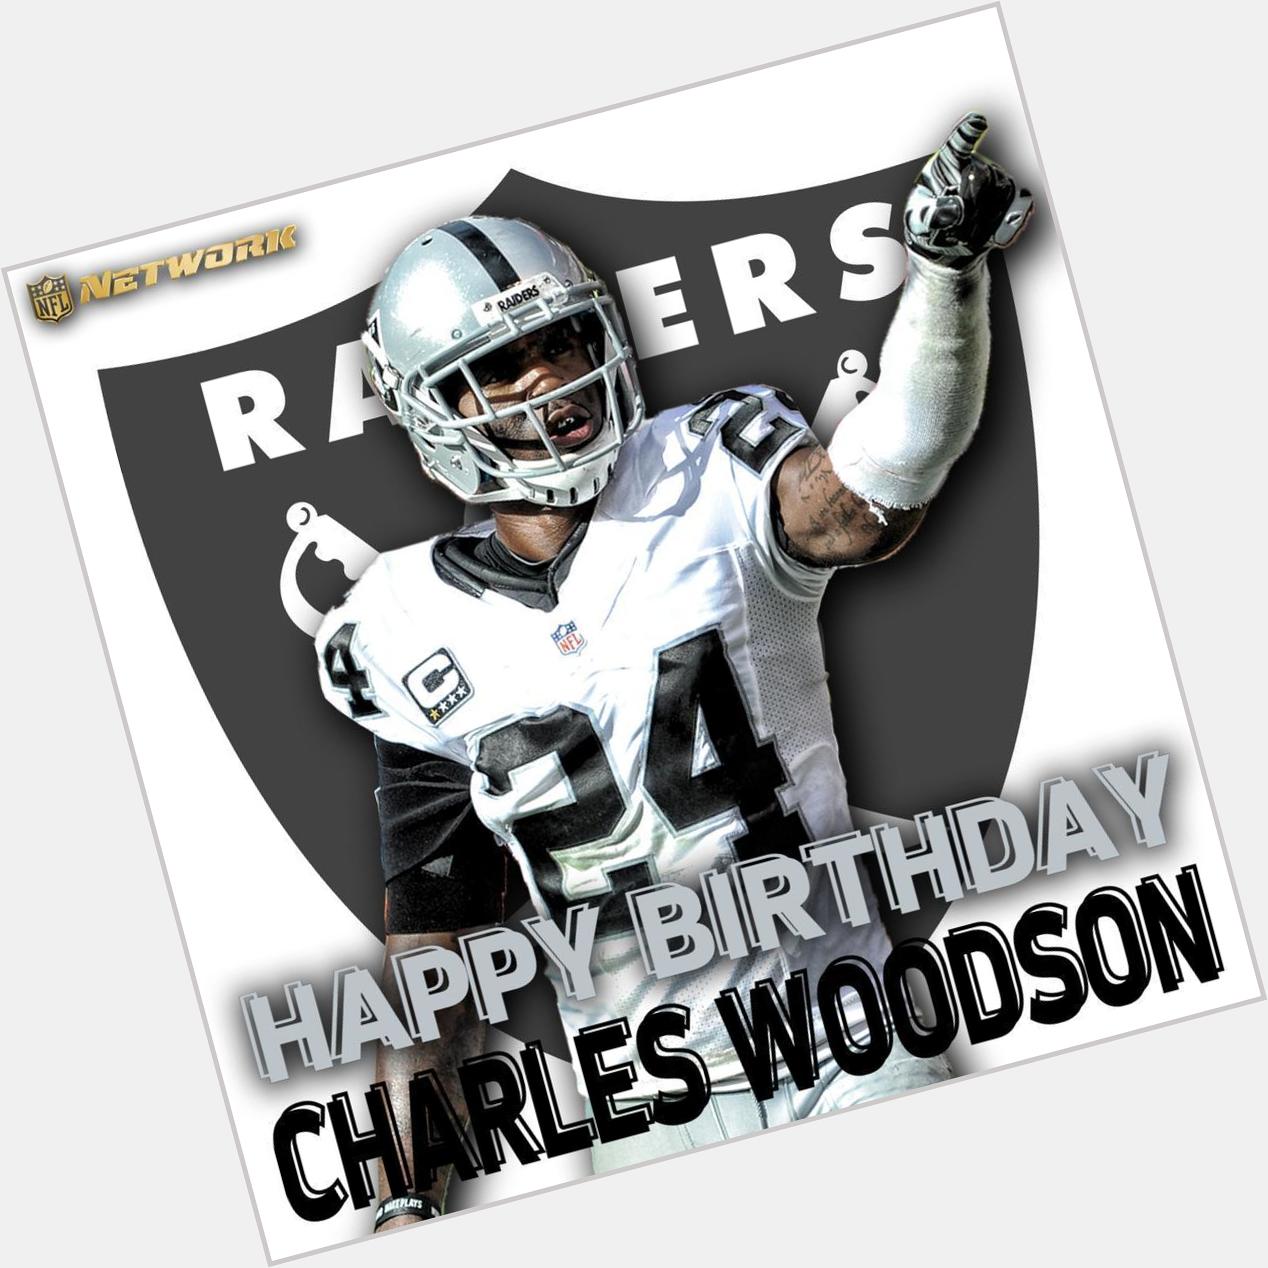 RAIDERS : nflnetwork: 39 and still ball hawking.

Happy birthday, Charles Woodson! 